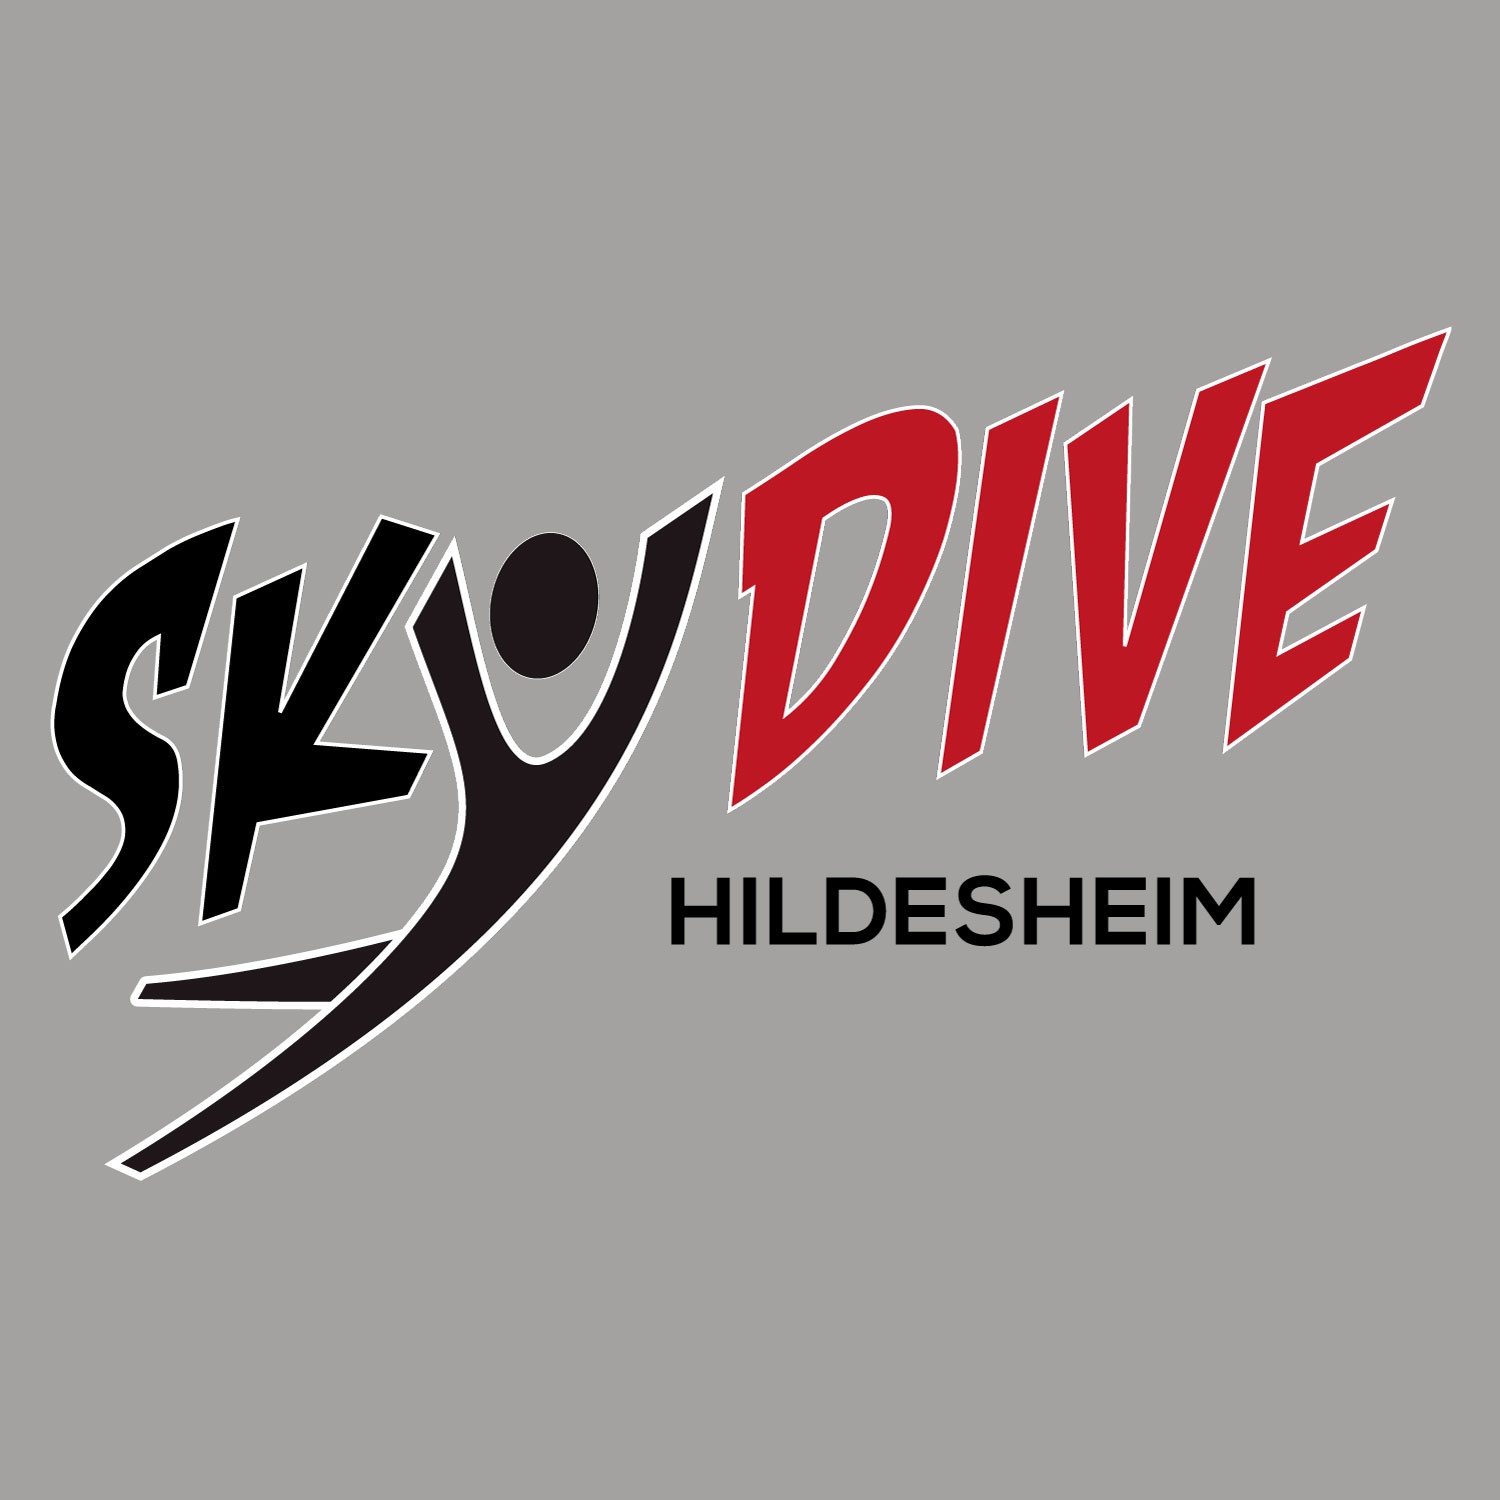 (c) Skydive-hildesheim.de